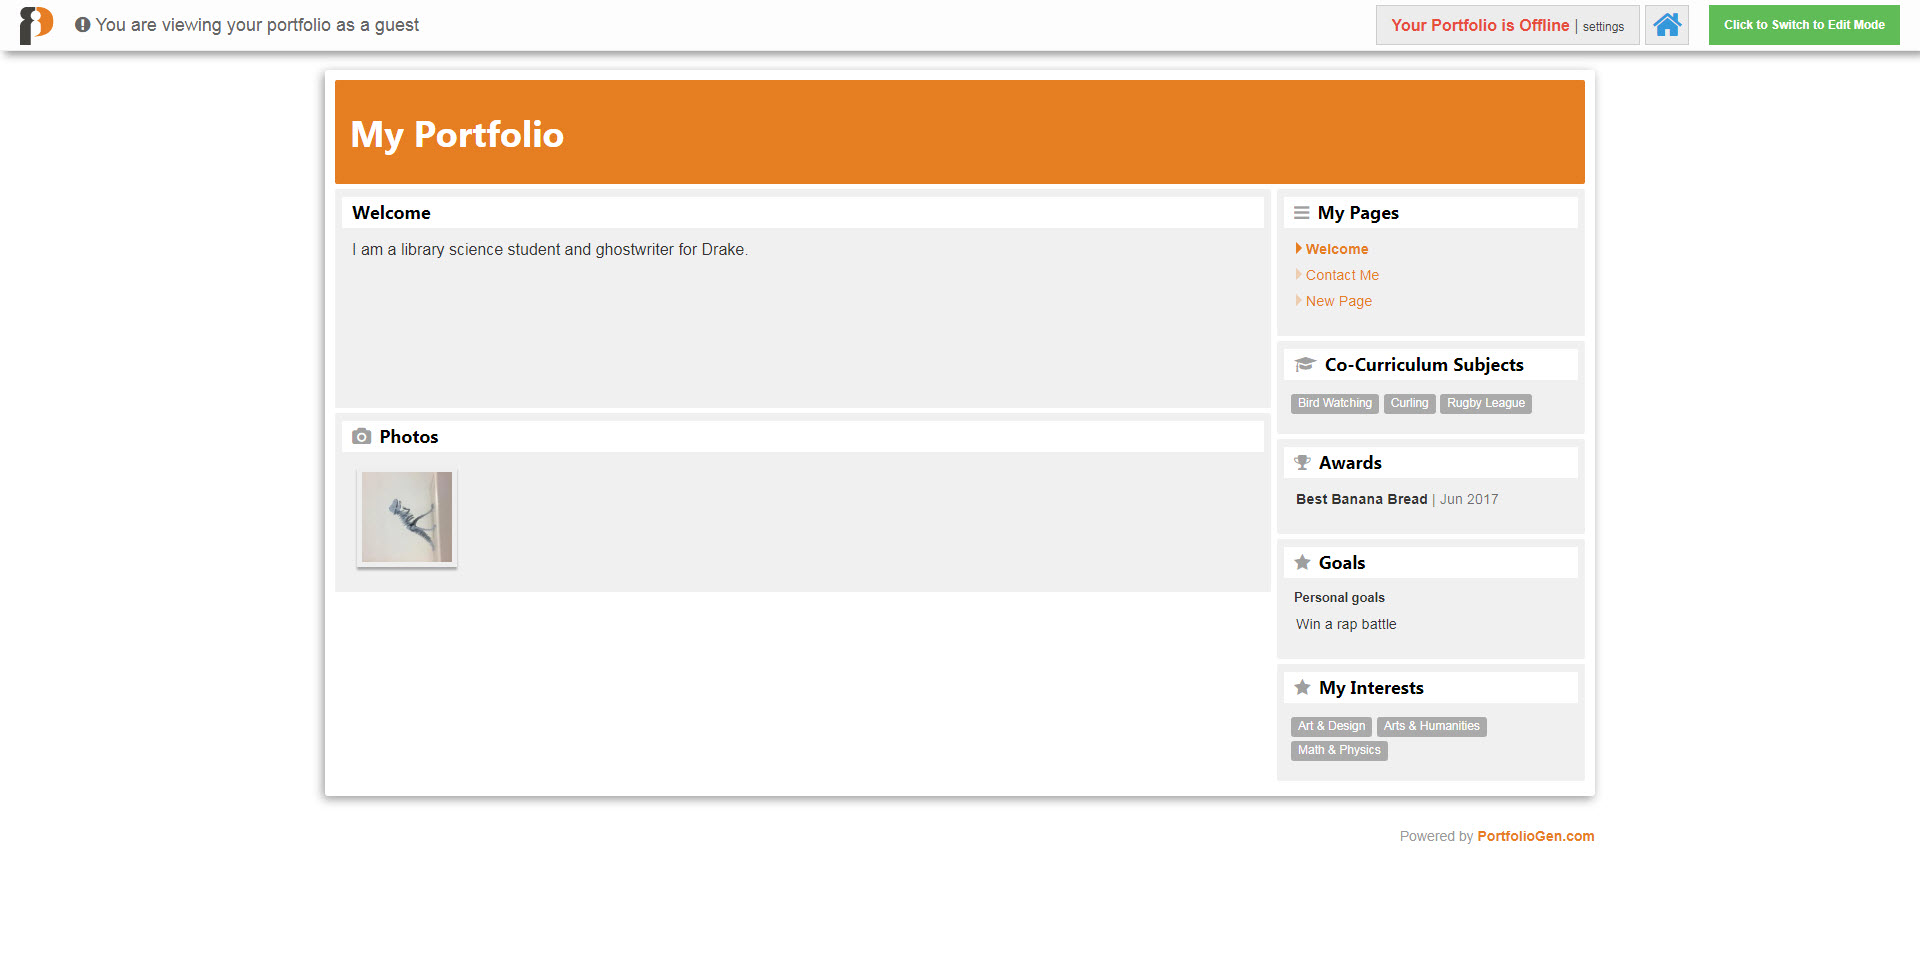 Portfolio homepage with default settings